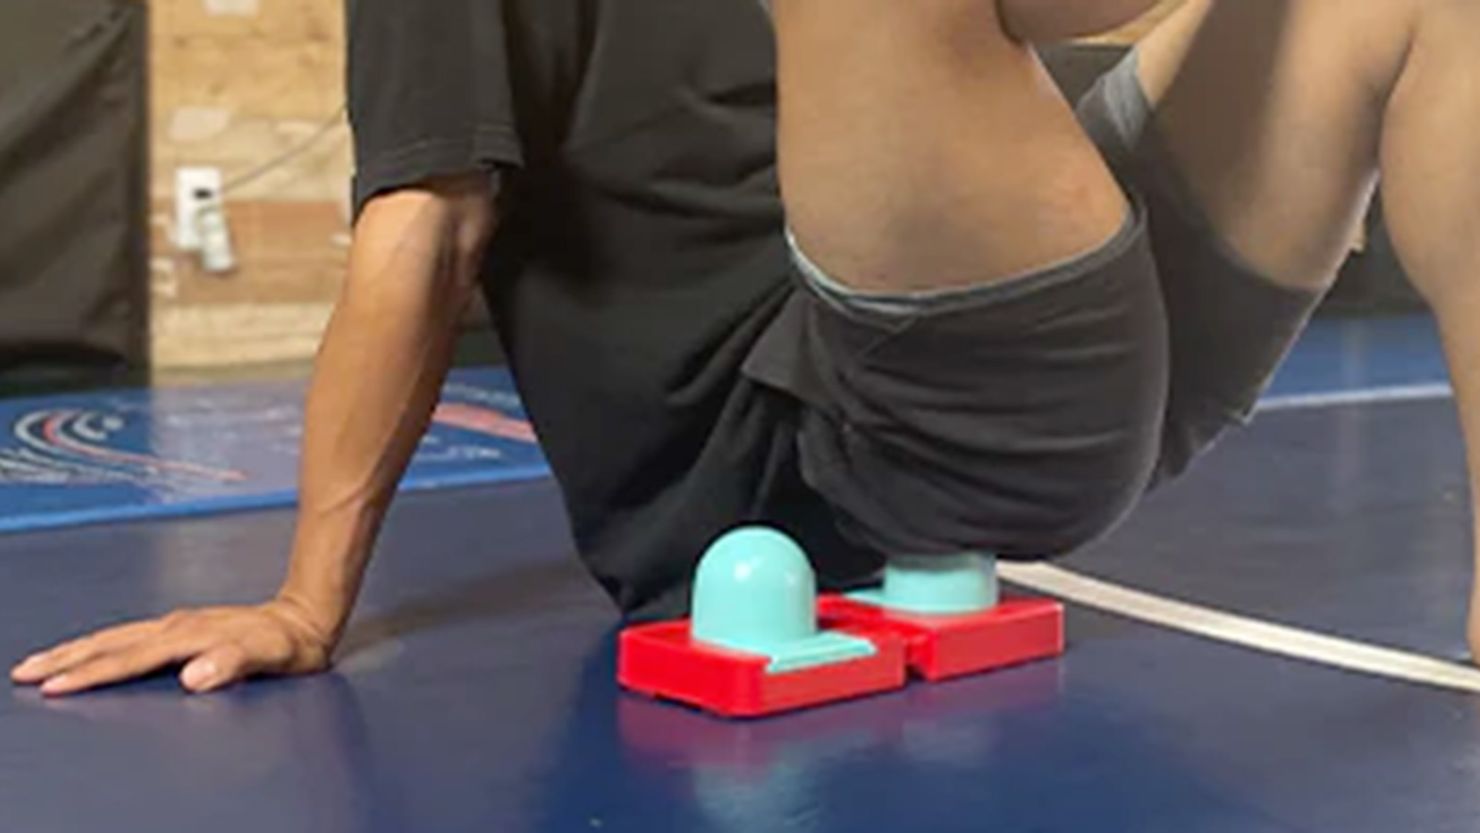  Body Back Manual Massage Roller Ball, Roller Massager, Self  Massager, Lacrosse Ball Massager, Back Massage Tool, Self Massage Ball for  Sore Muscle & Joint Pain (Blue) : Health & Household